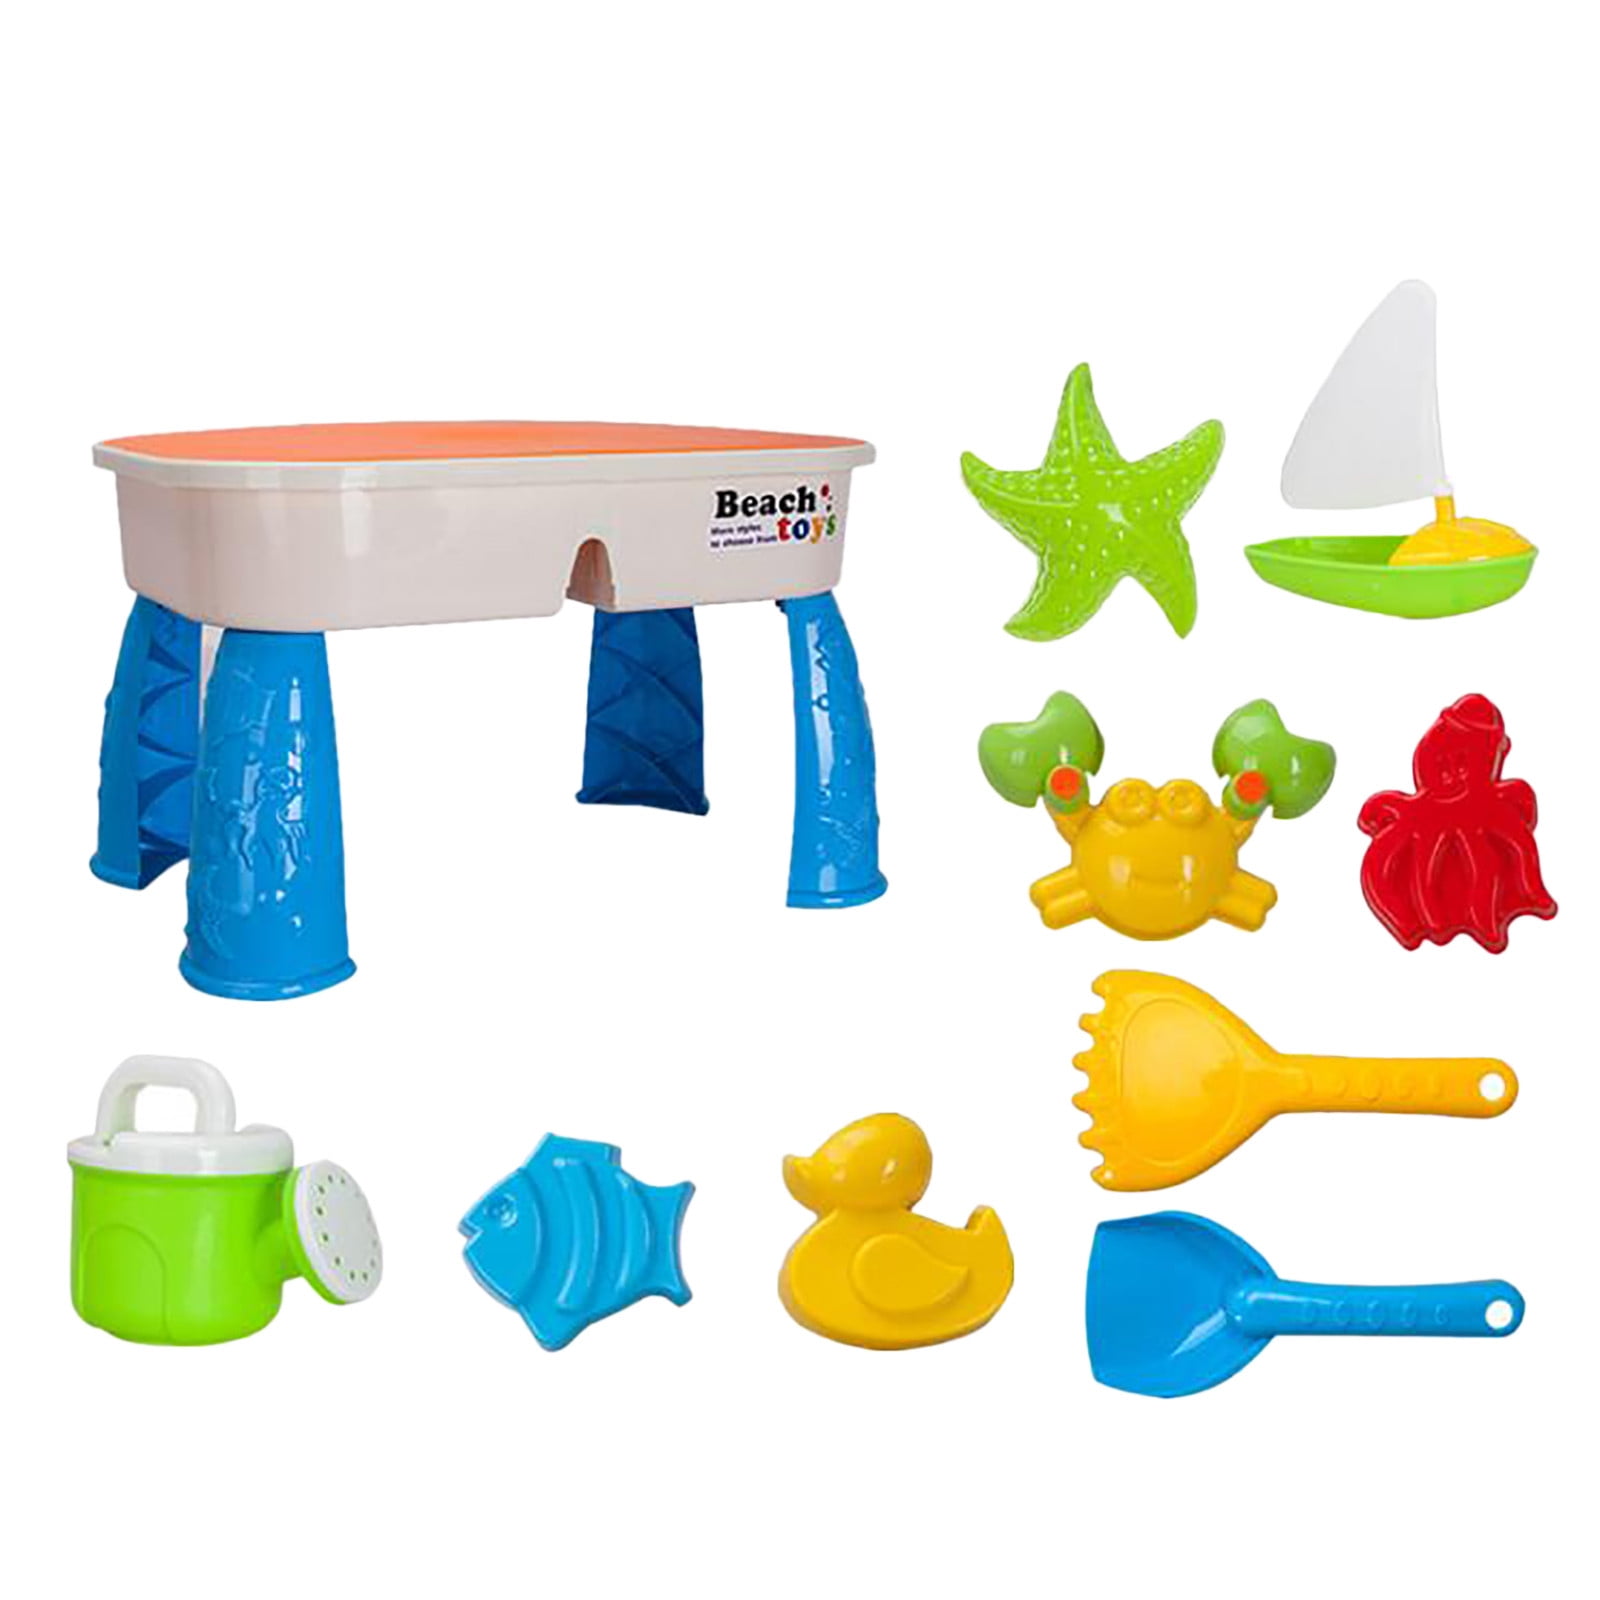 Sacow_ Kids Beach Toys Set Sand Molds Tools Sandbox Toys On Summer Holiday 11pc